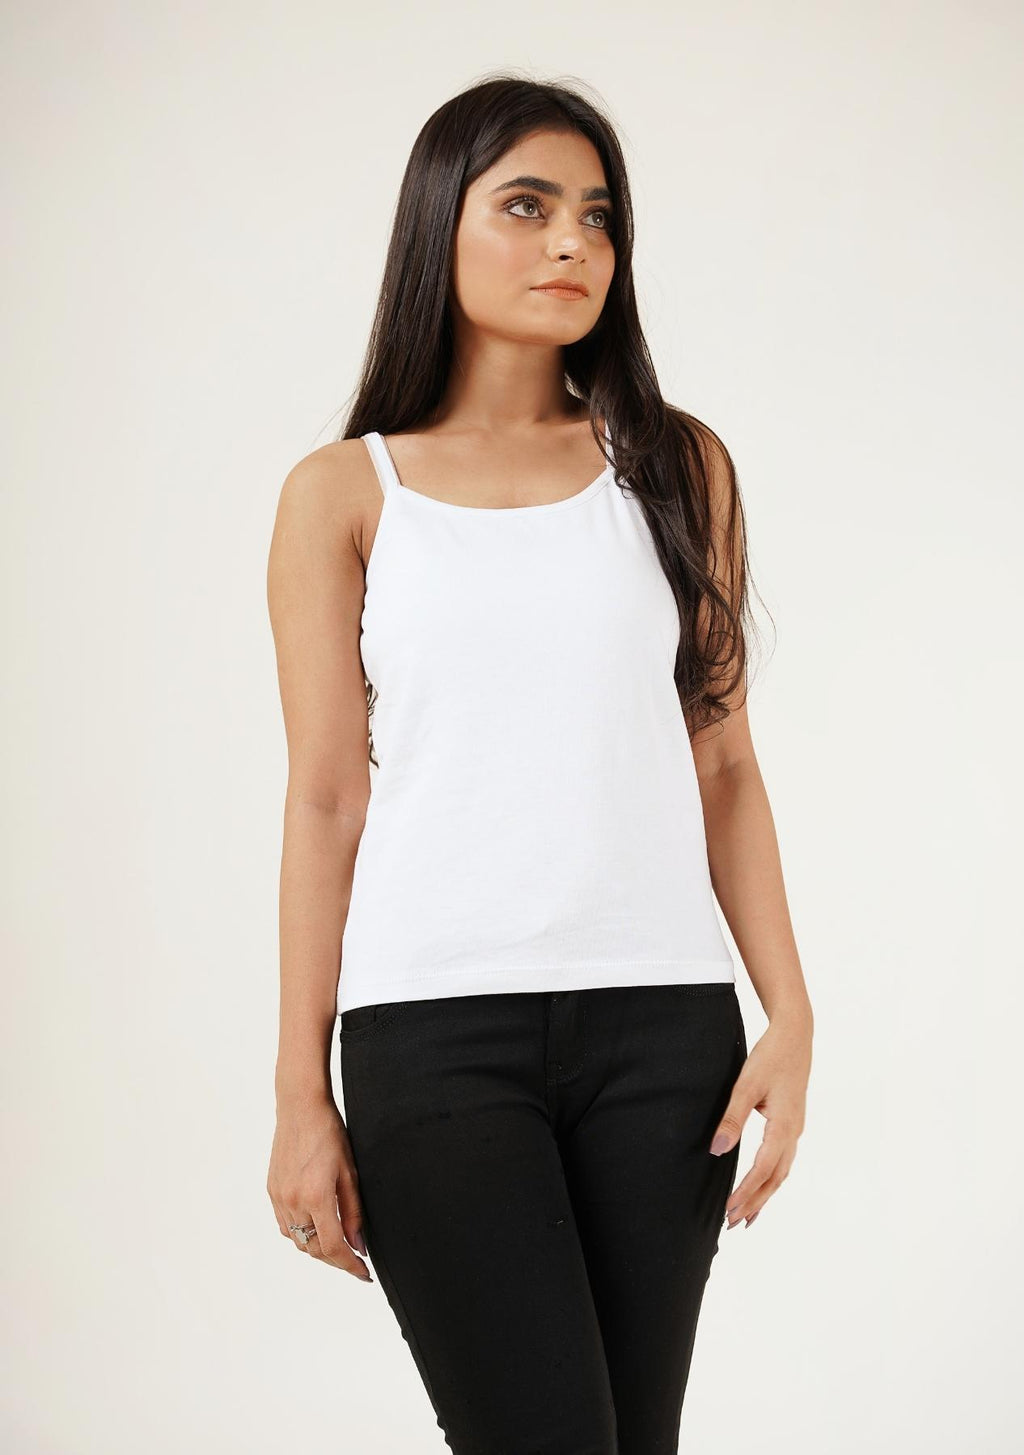 Women's Camisoles Non Adjustable - 100 Cm, White at Rs 99/piece, Camisoles